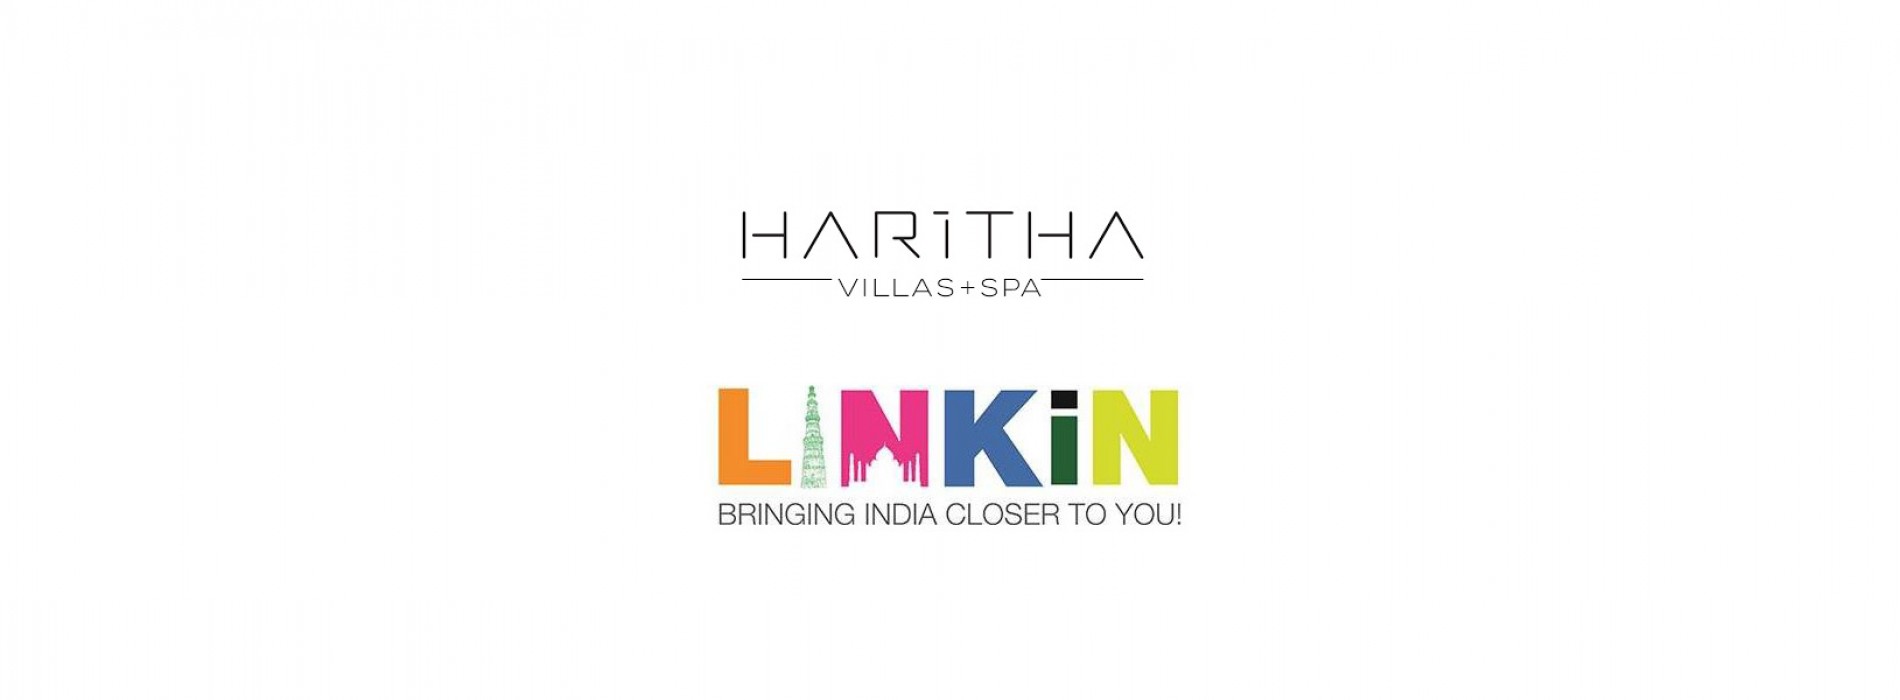 Haritha Villas + Spa participates in 3-city roadshow to enhance presence in the India Market